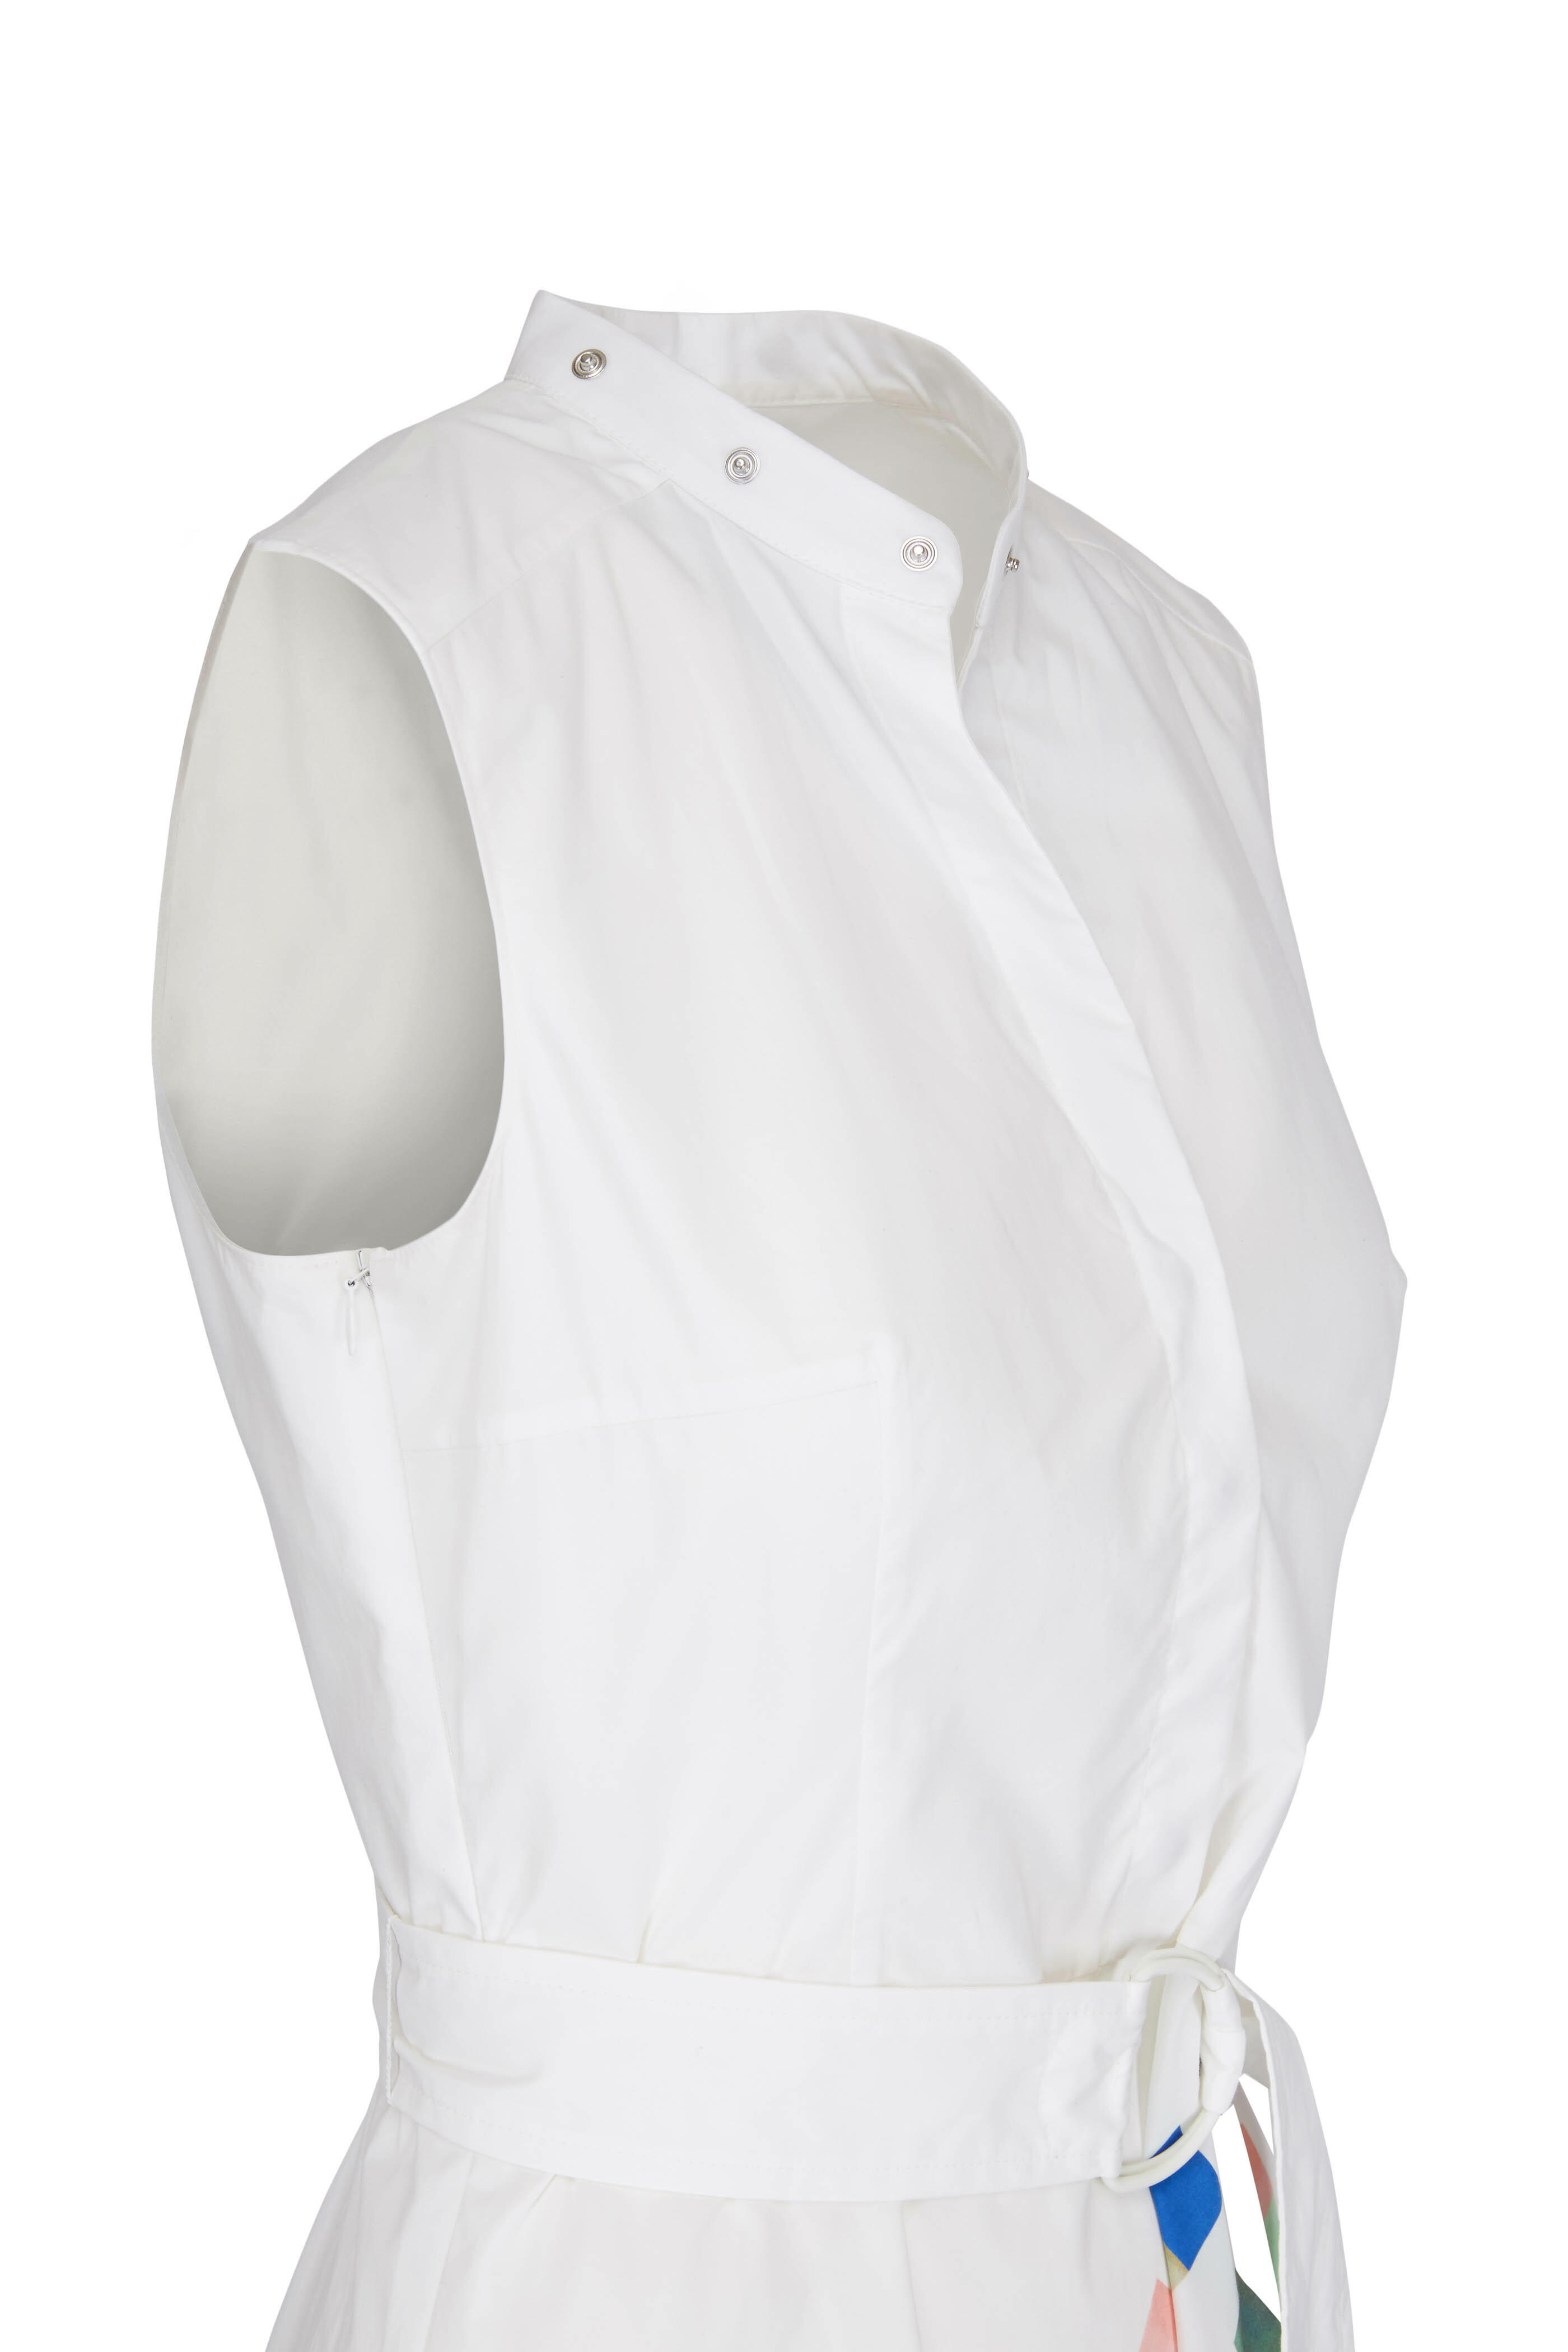 Akris Punto Sz 2 Elegant White Geometric Funky Fit & Flare Pleated Dress